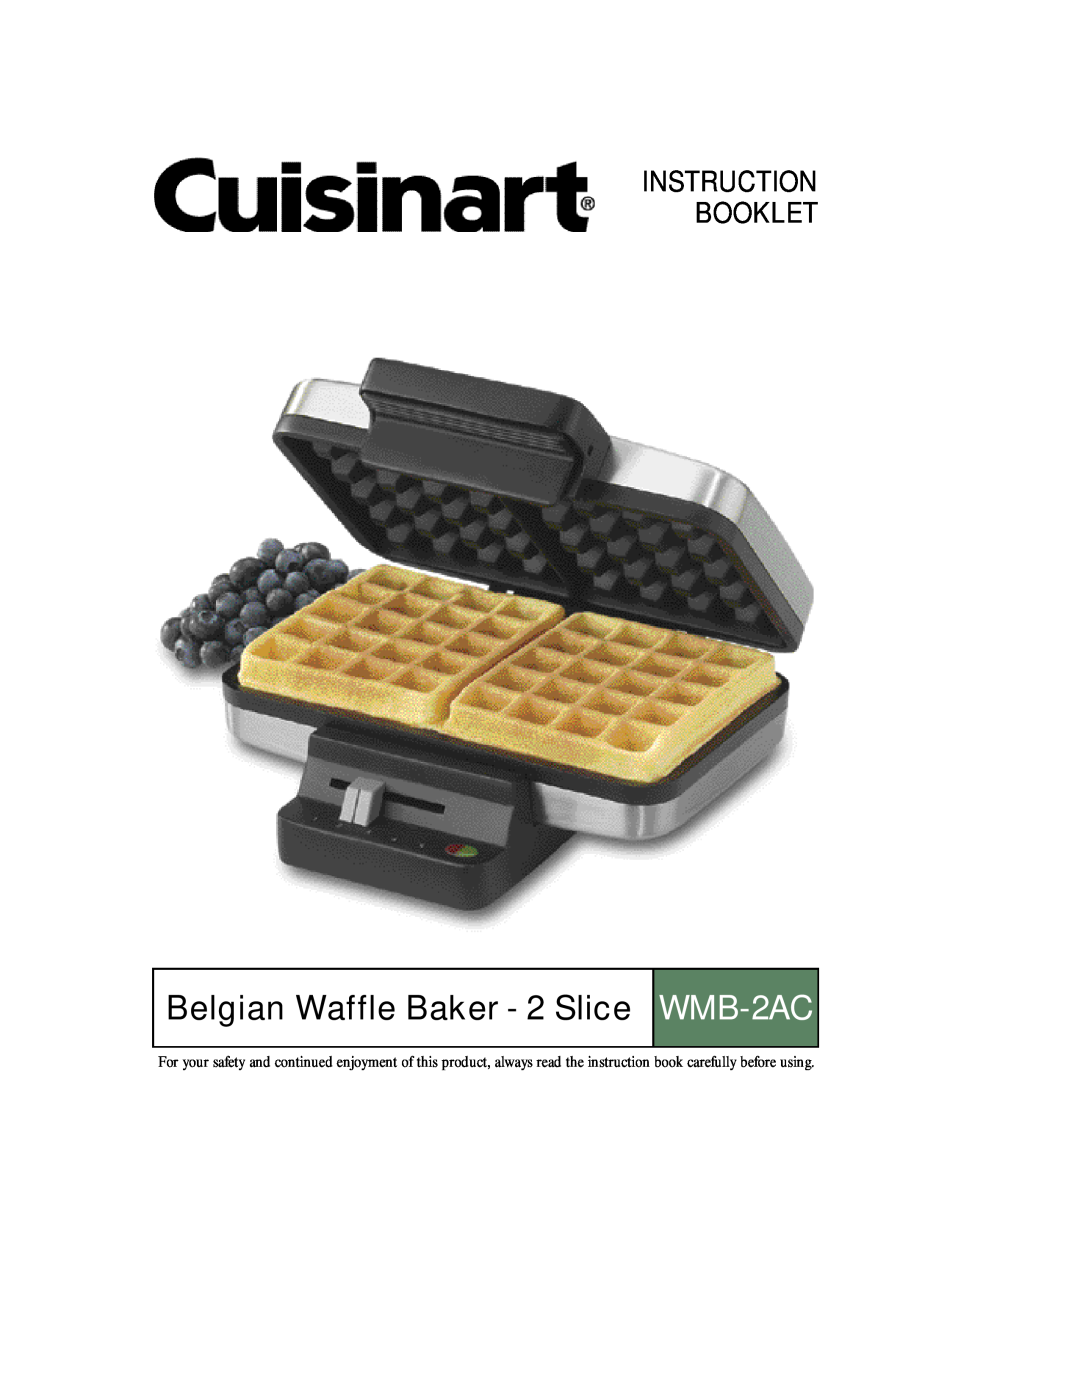 Cuisinart manual Belgian Waffle Baker - 2 Slice WMB-2AC, Instruction Booklet 